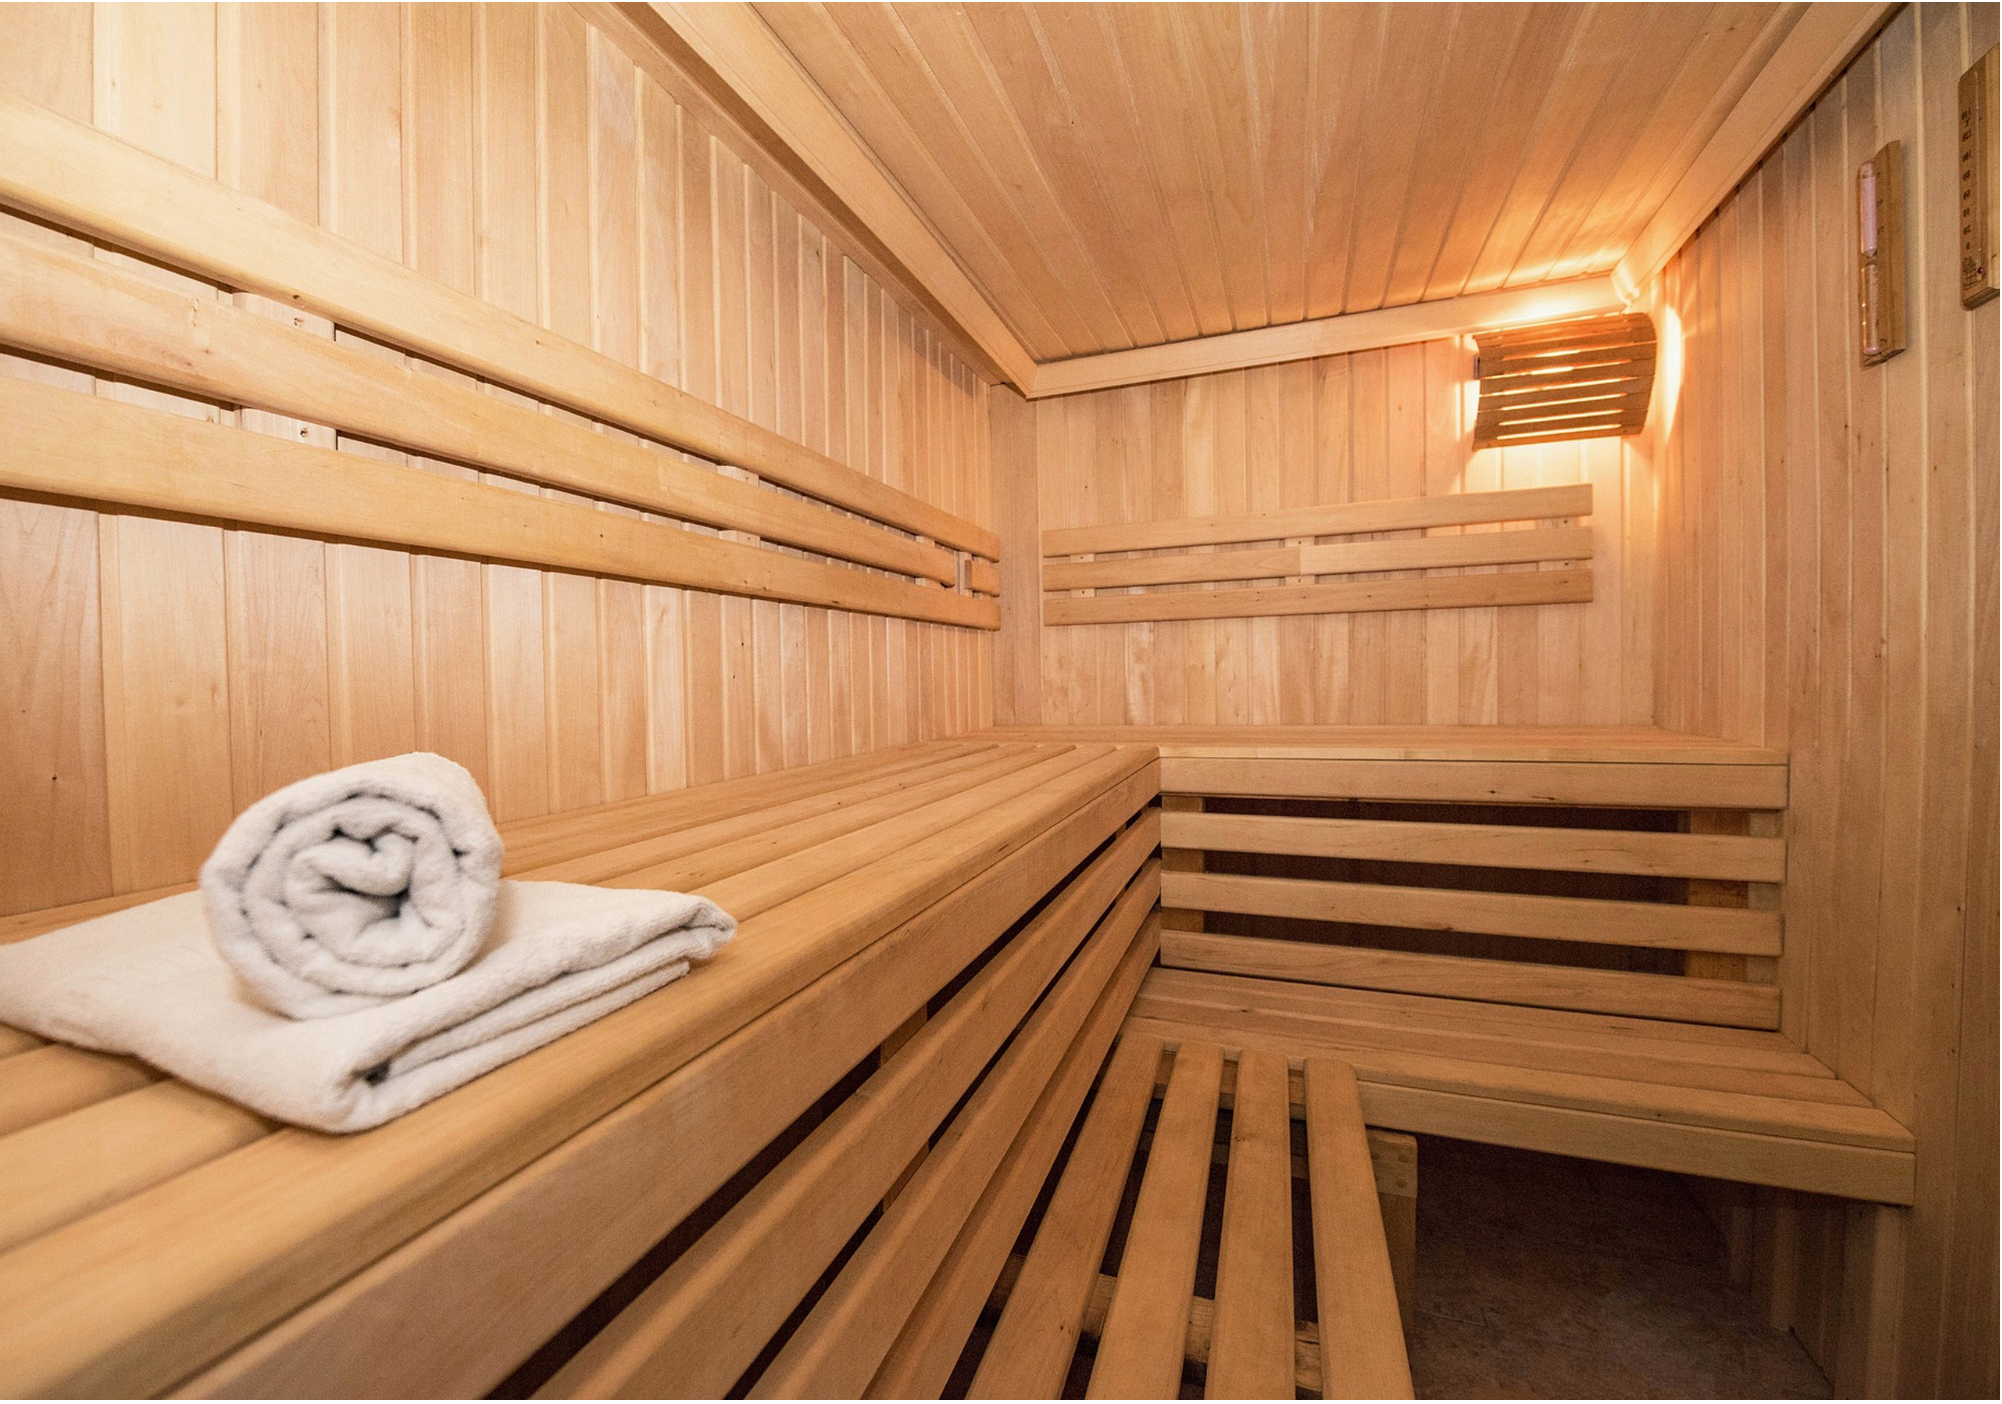 Interior de la sauna finlandesa. Sauna de madera clásica. Baño